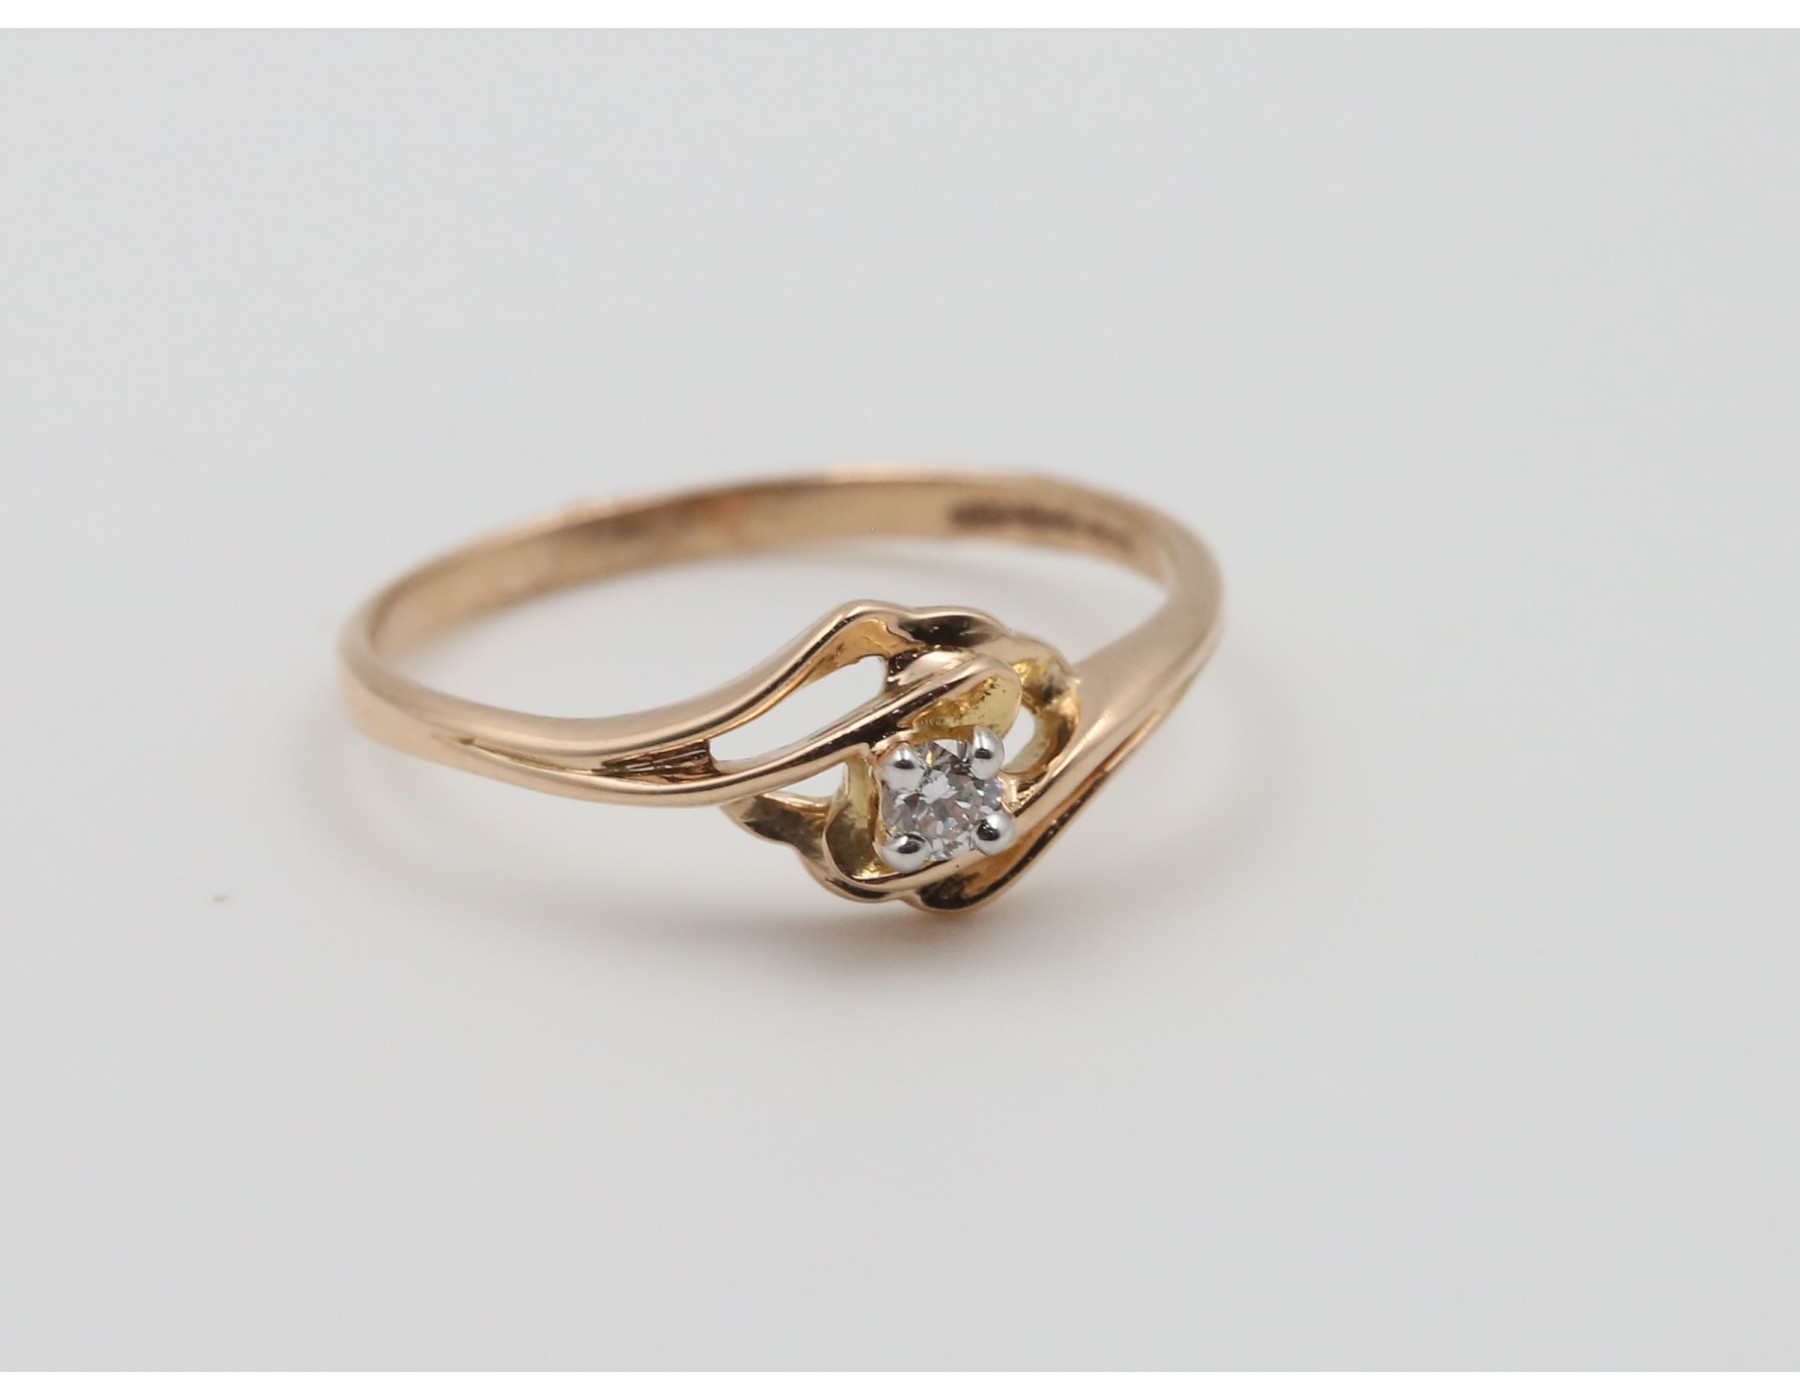 1 Gram Gold Forming Expensive-looking Design High-quality Ring For Men -  Style B070, Gold Forming Jewelry, सोने का पानी चढ़े हुए गहने, गोल्ड  फॉर्मिंग ज्वेलरी - Soni Fashion, Rajkot | ID: 2849097428833